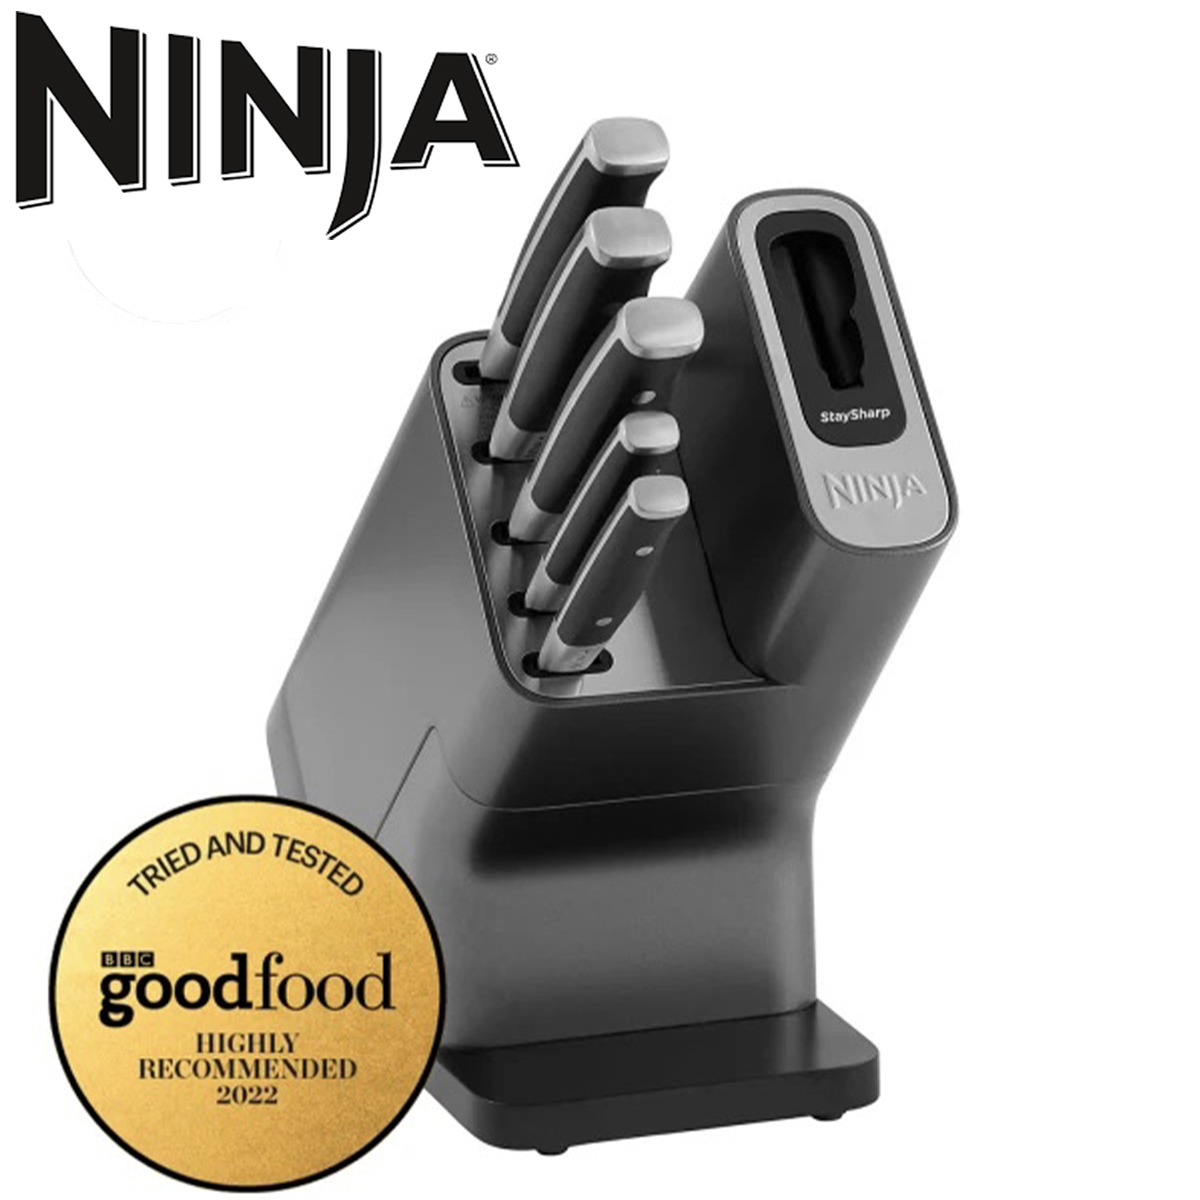 Ninja Foodi StaySharp 6pc Knife Block #5